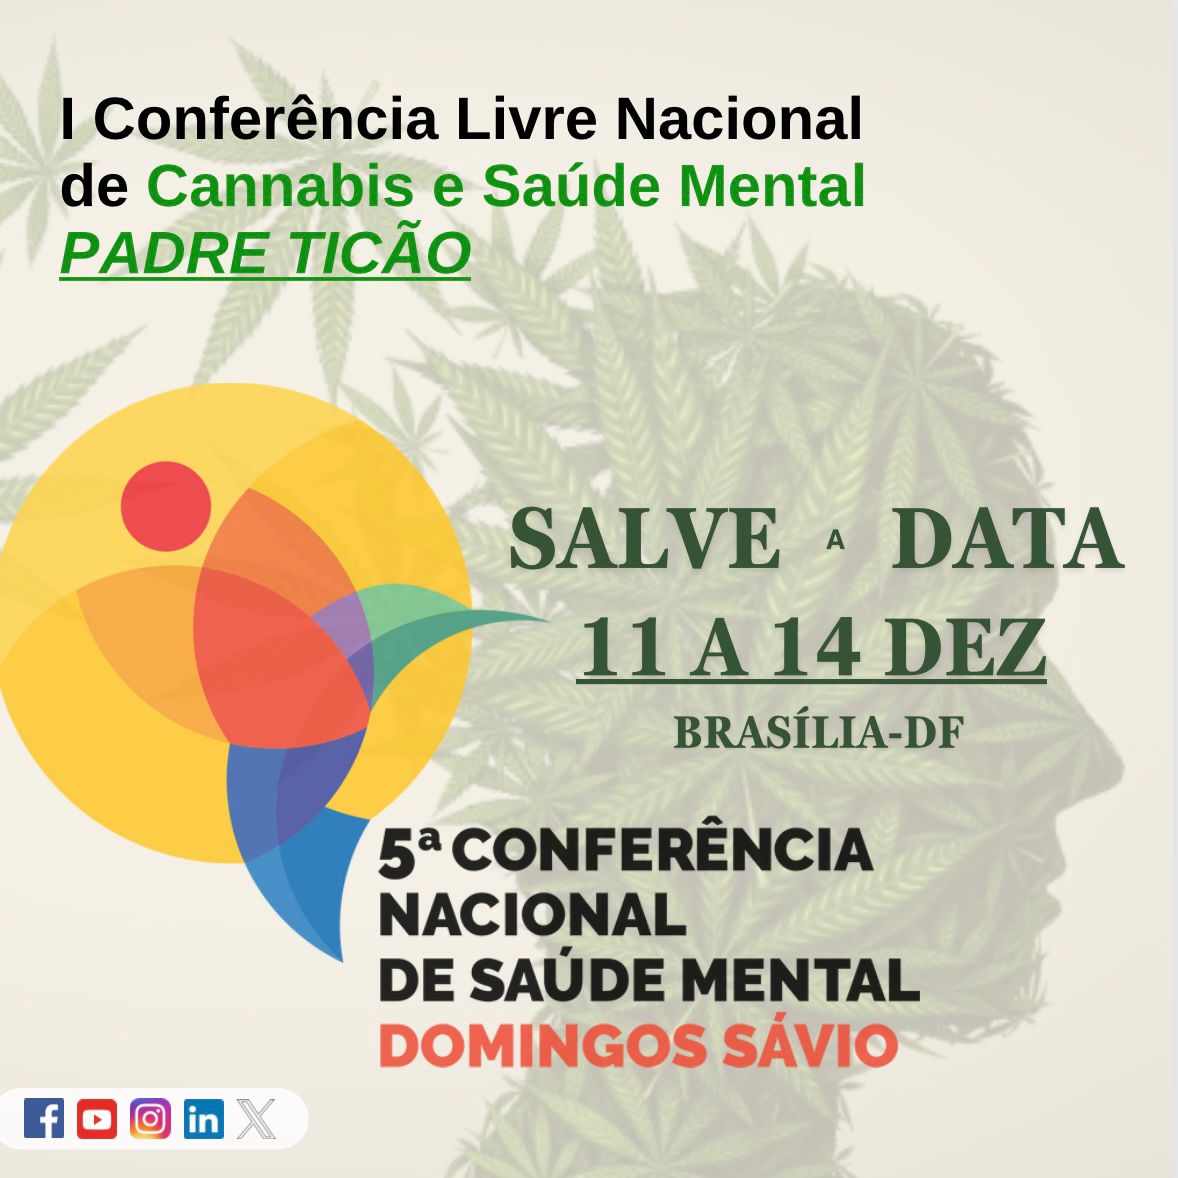 conferencia-nacional-saude-mental-cannabis-brasilia